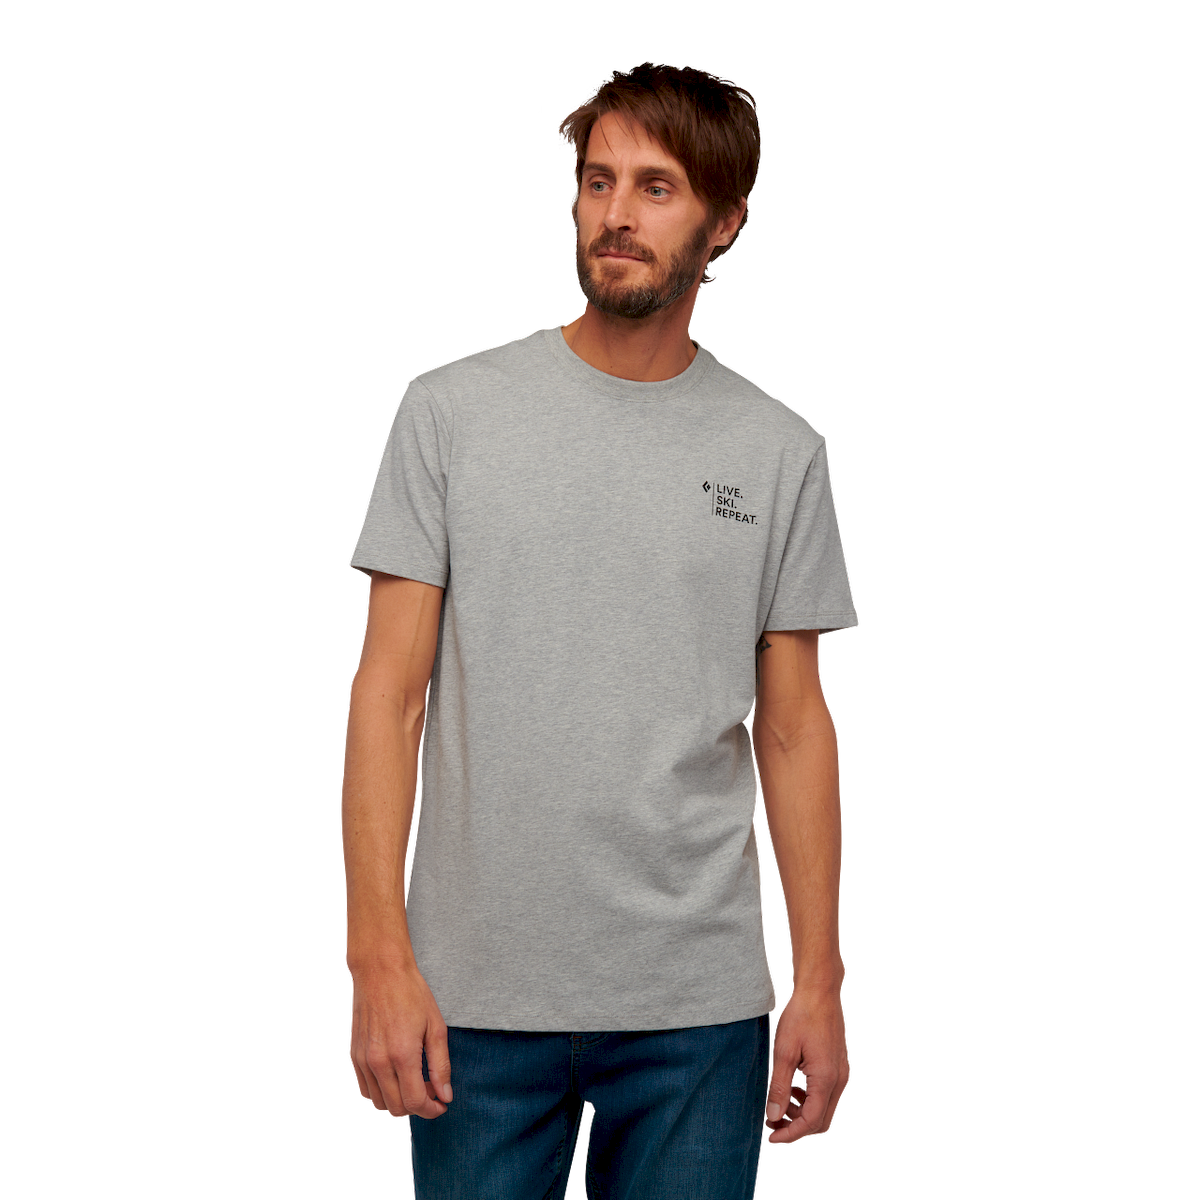 Black Diamond Ski Mountaineering Tee - T-shirt - Men's